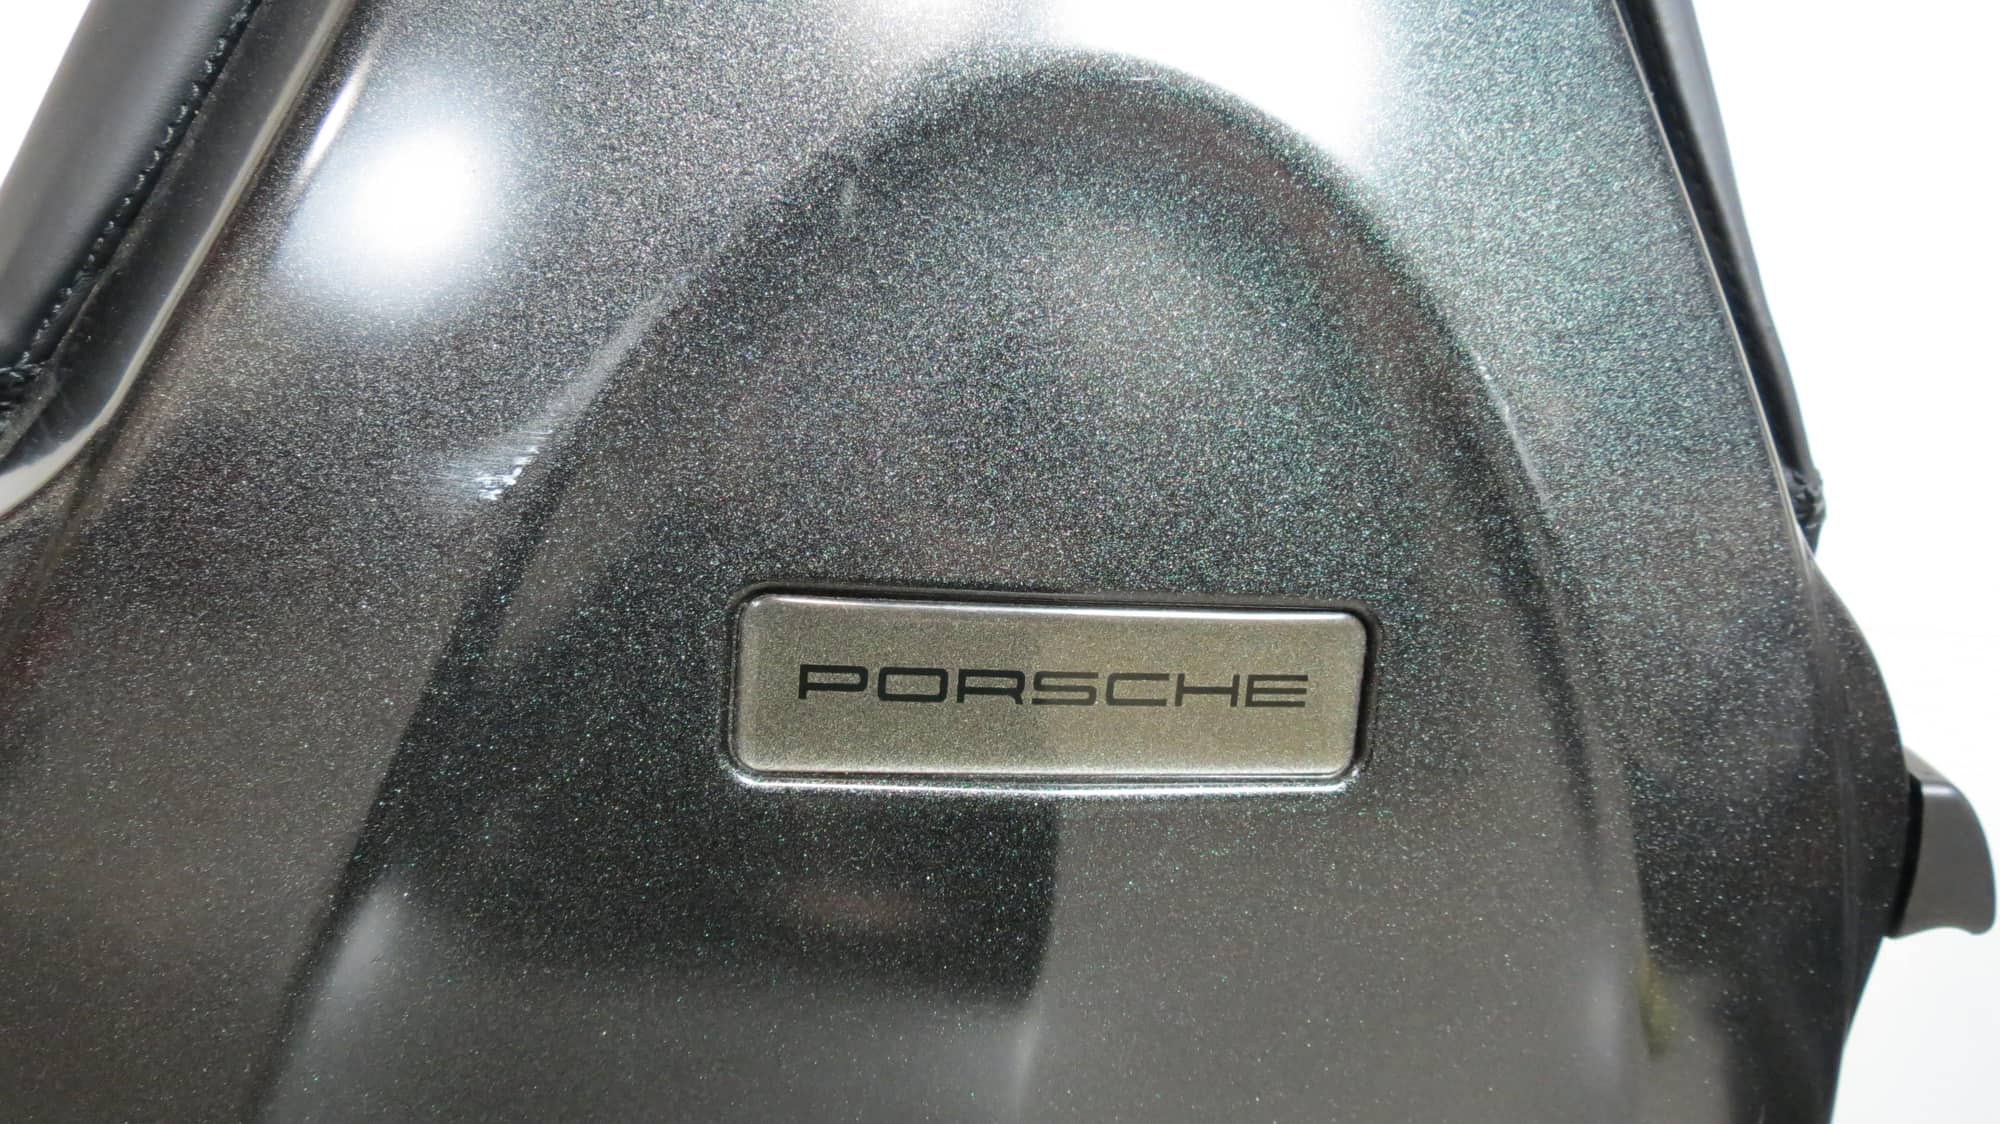 Interior/Upholstery - OEM Porsche 911 993 Recaro Turbo Hardback Recaro Black Leather Sport Seats - Set of 2 - New - 1974 to 1998 Porsche 911 - Saddle Brook, NJ 07663, United States